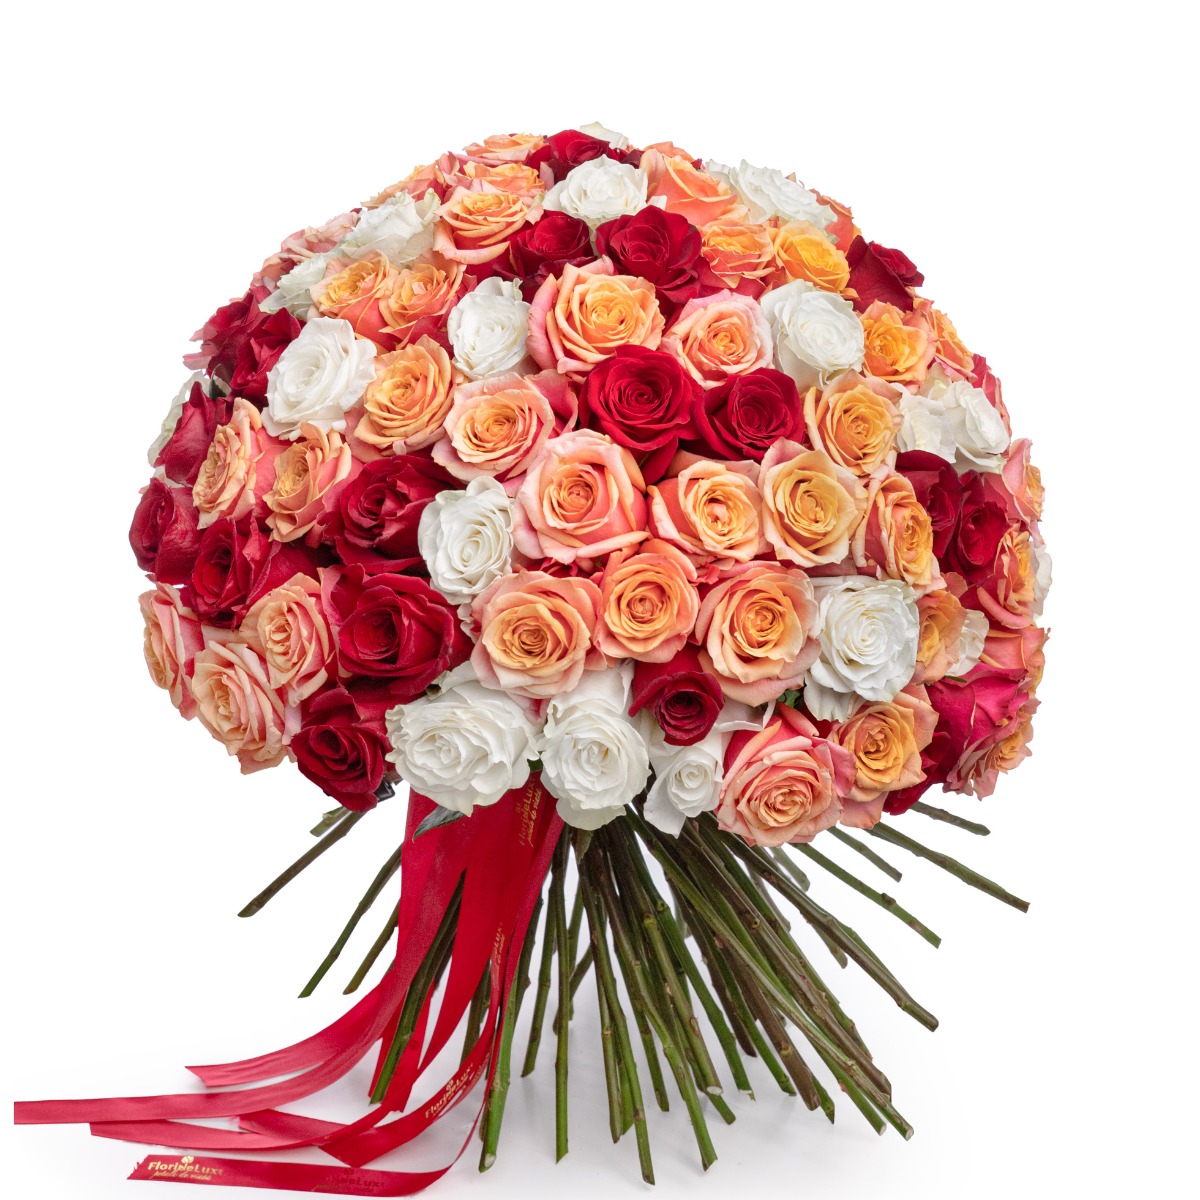 Aranjament floral cu trandafiri si lalele roz Jolie Aranjament